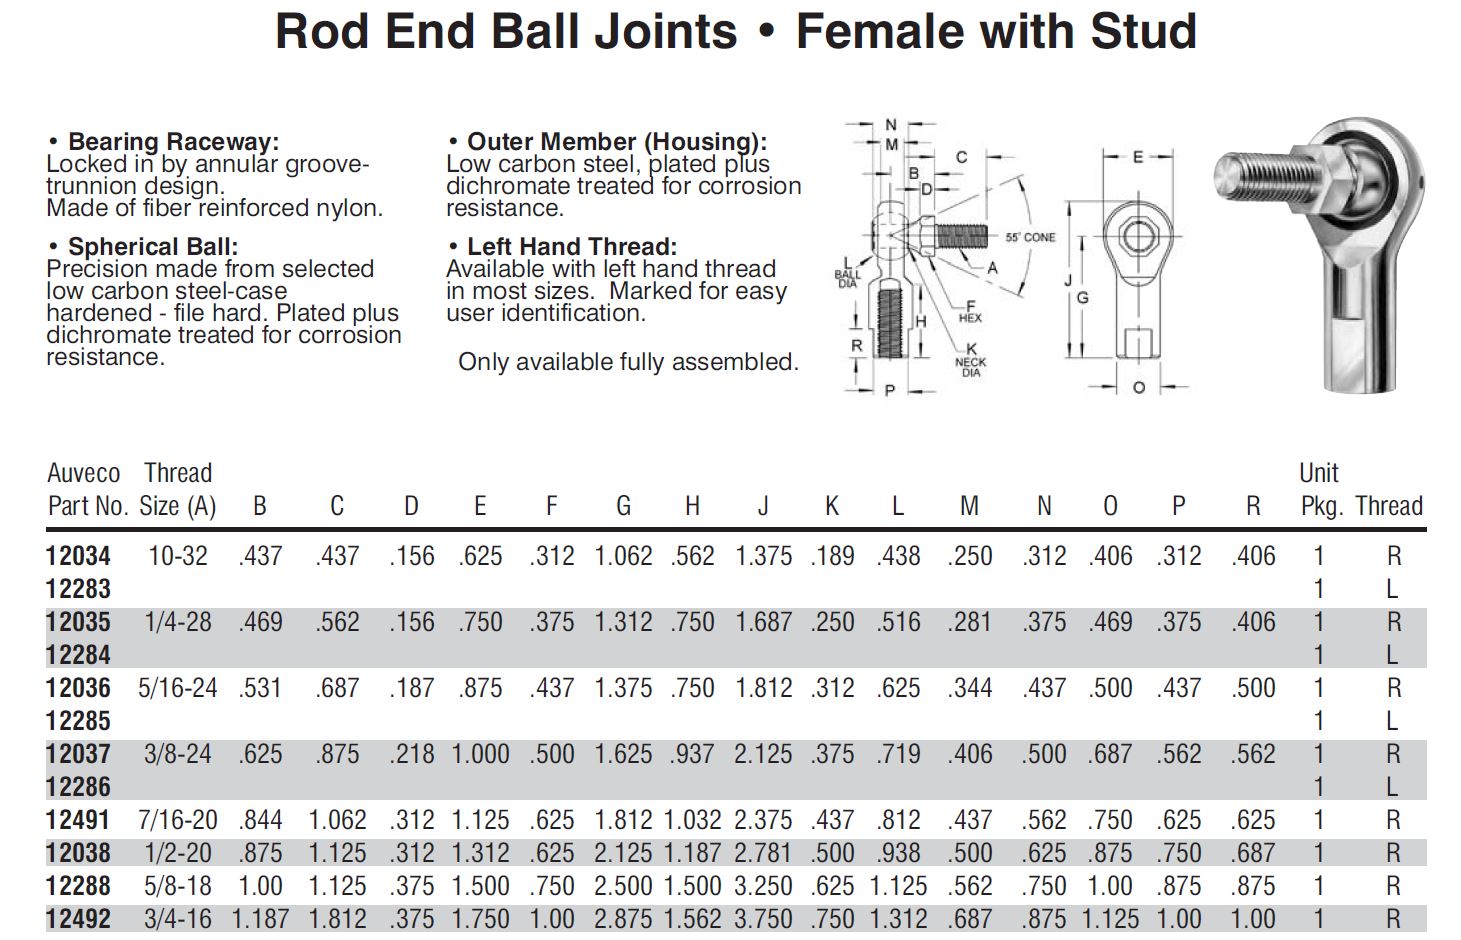 Auveco # 12285 Rod End Ball Joint Female W/Stud 5/16-24 (L). Qty 1.